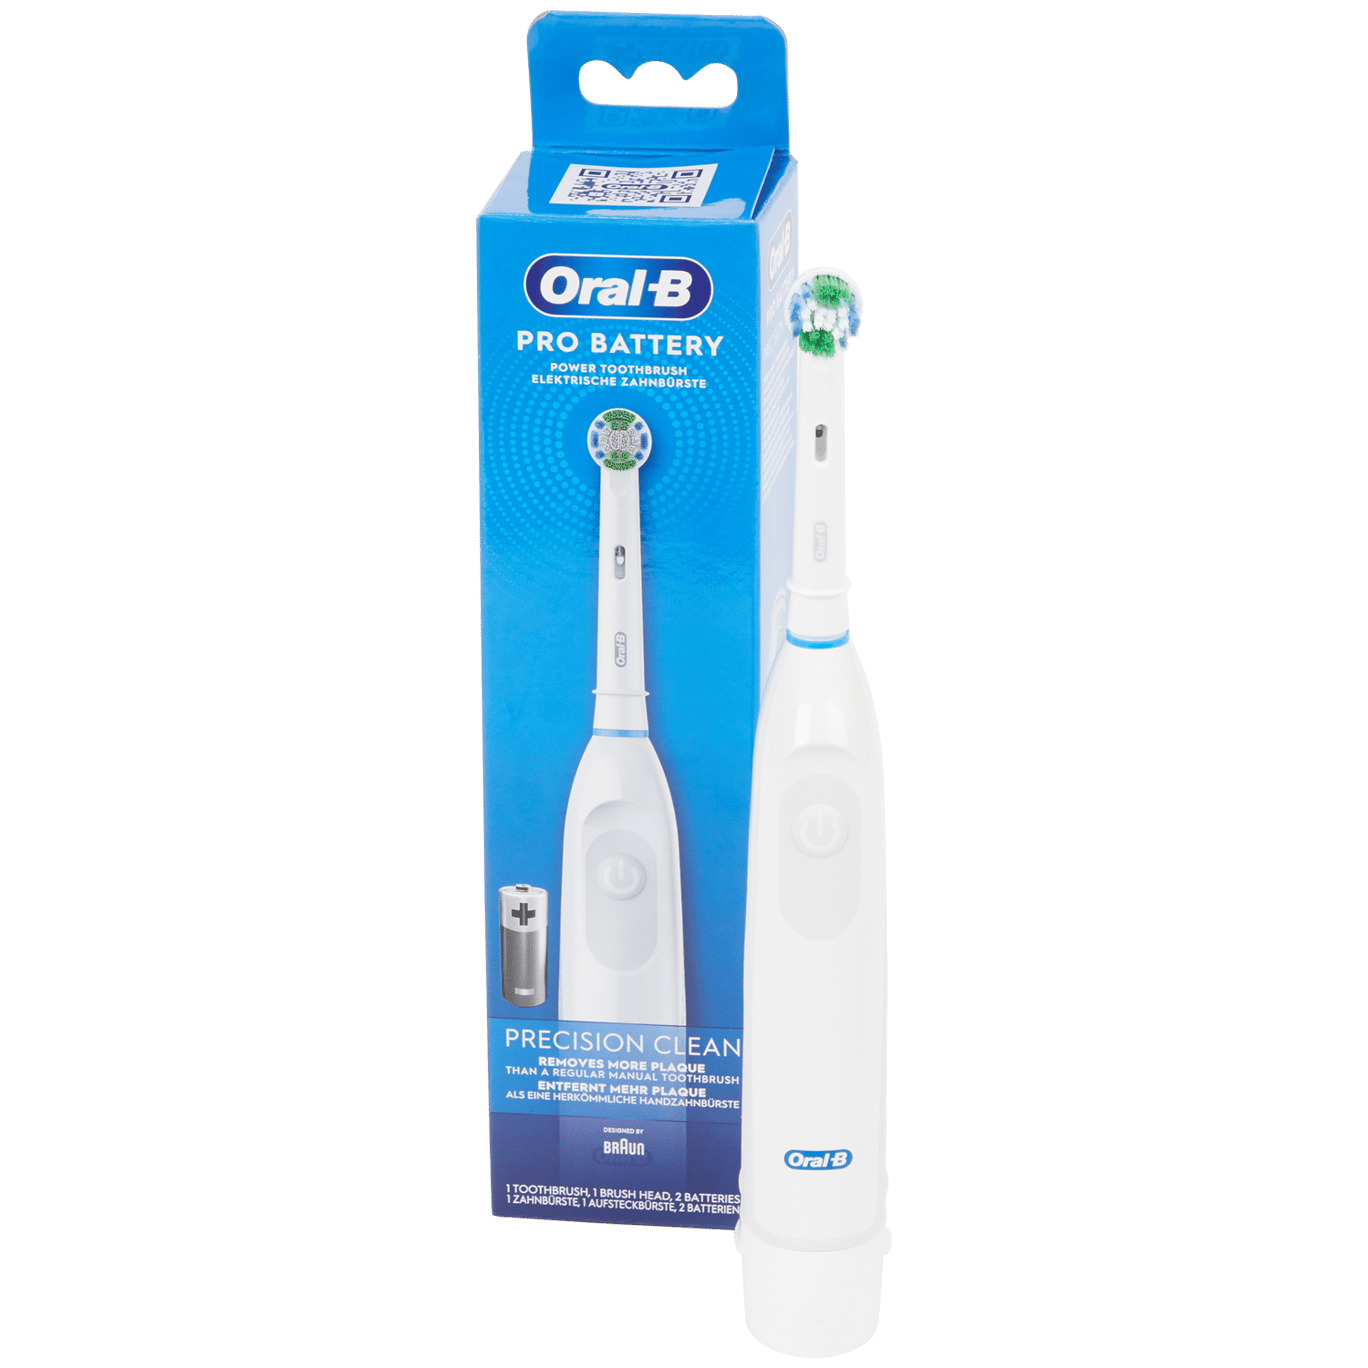 Escova de dentes elétrica Oral-B Pro Battery